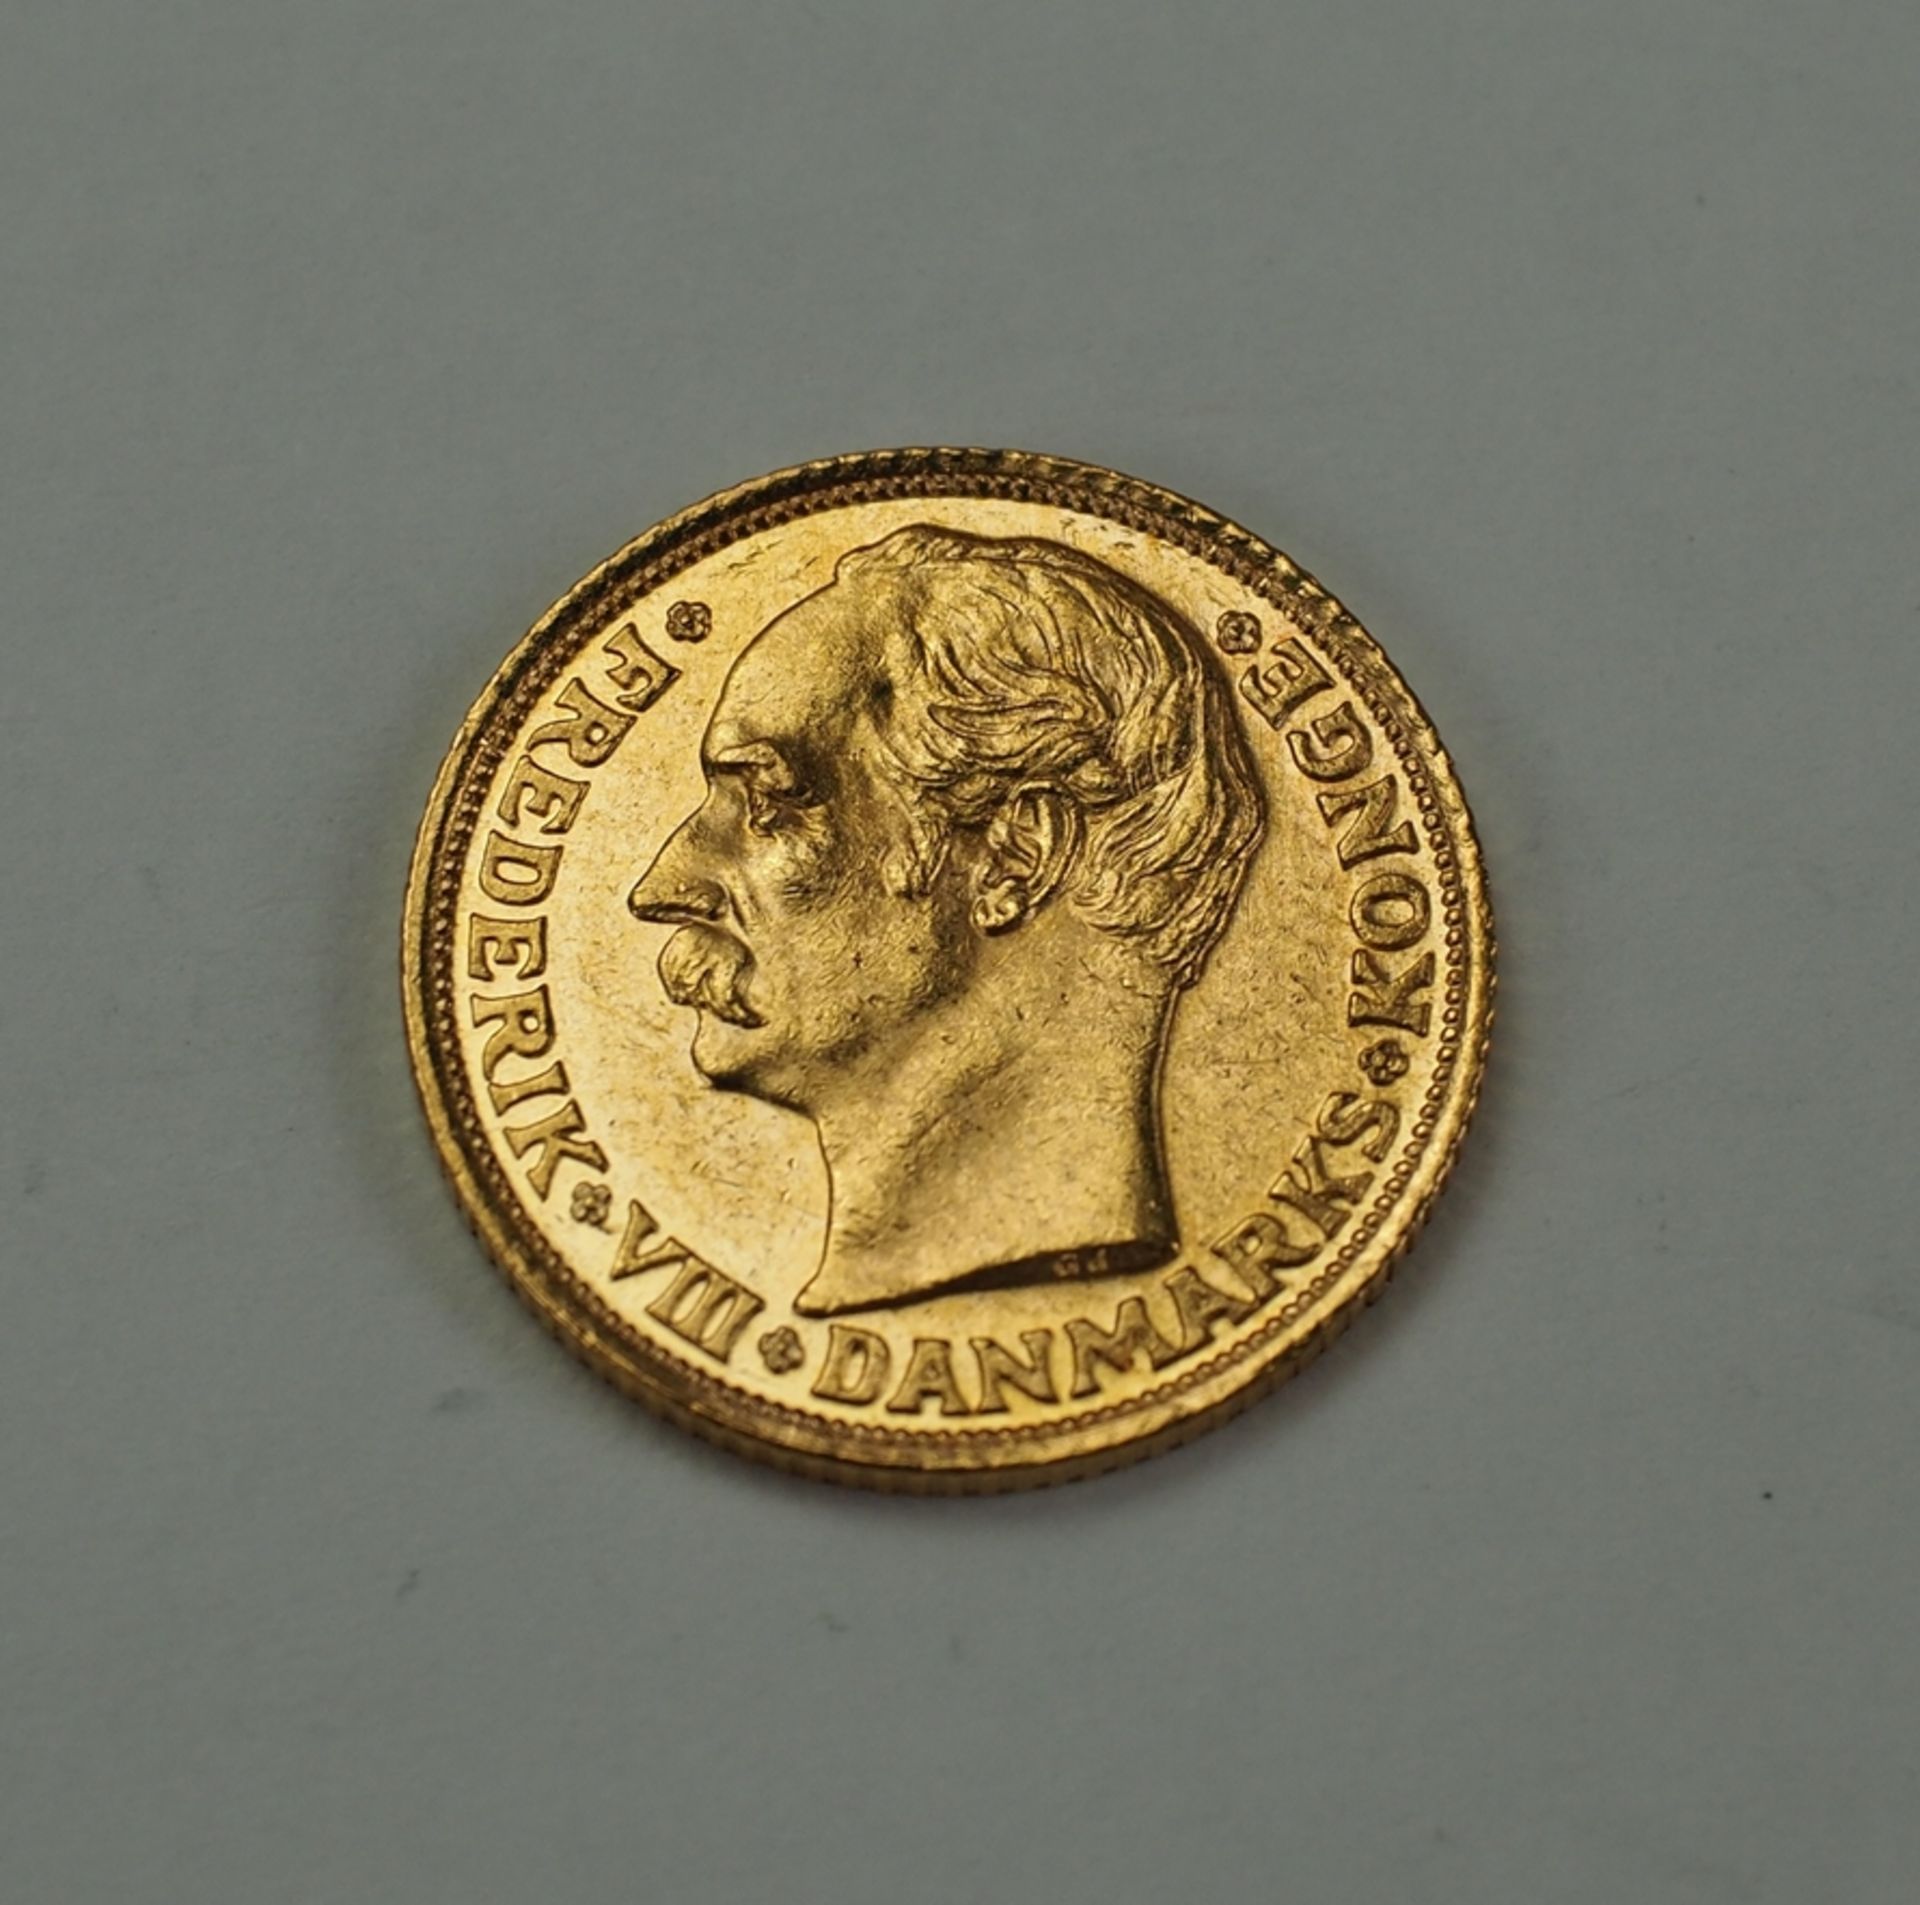 Dänemark: 10 Kronen 1908 - GOLD.